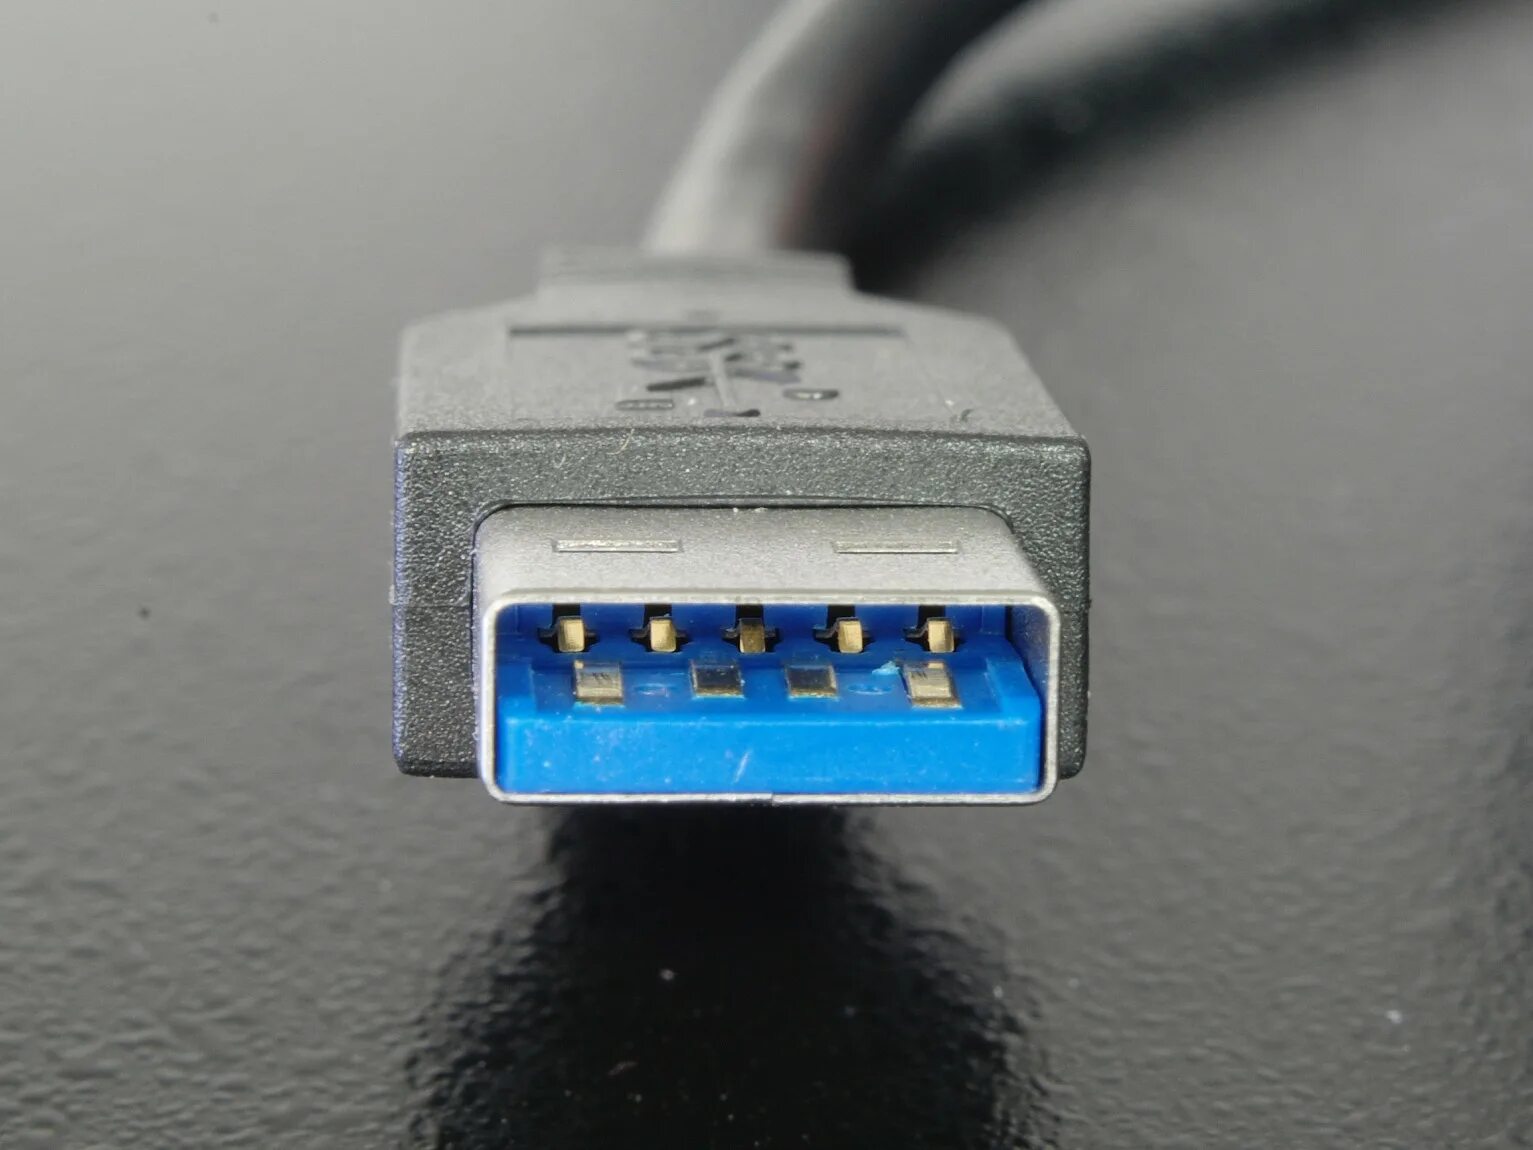 Usb connection. Разъем юсб 3.0. Разъёмы USB 2.0 И USB 3.0. Разъем USB 2.0 И 3.0. Разъём USB3.0/2.0.